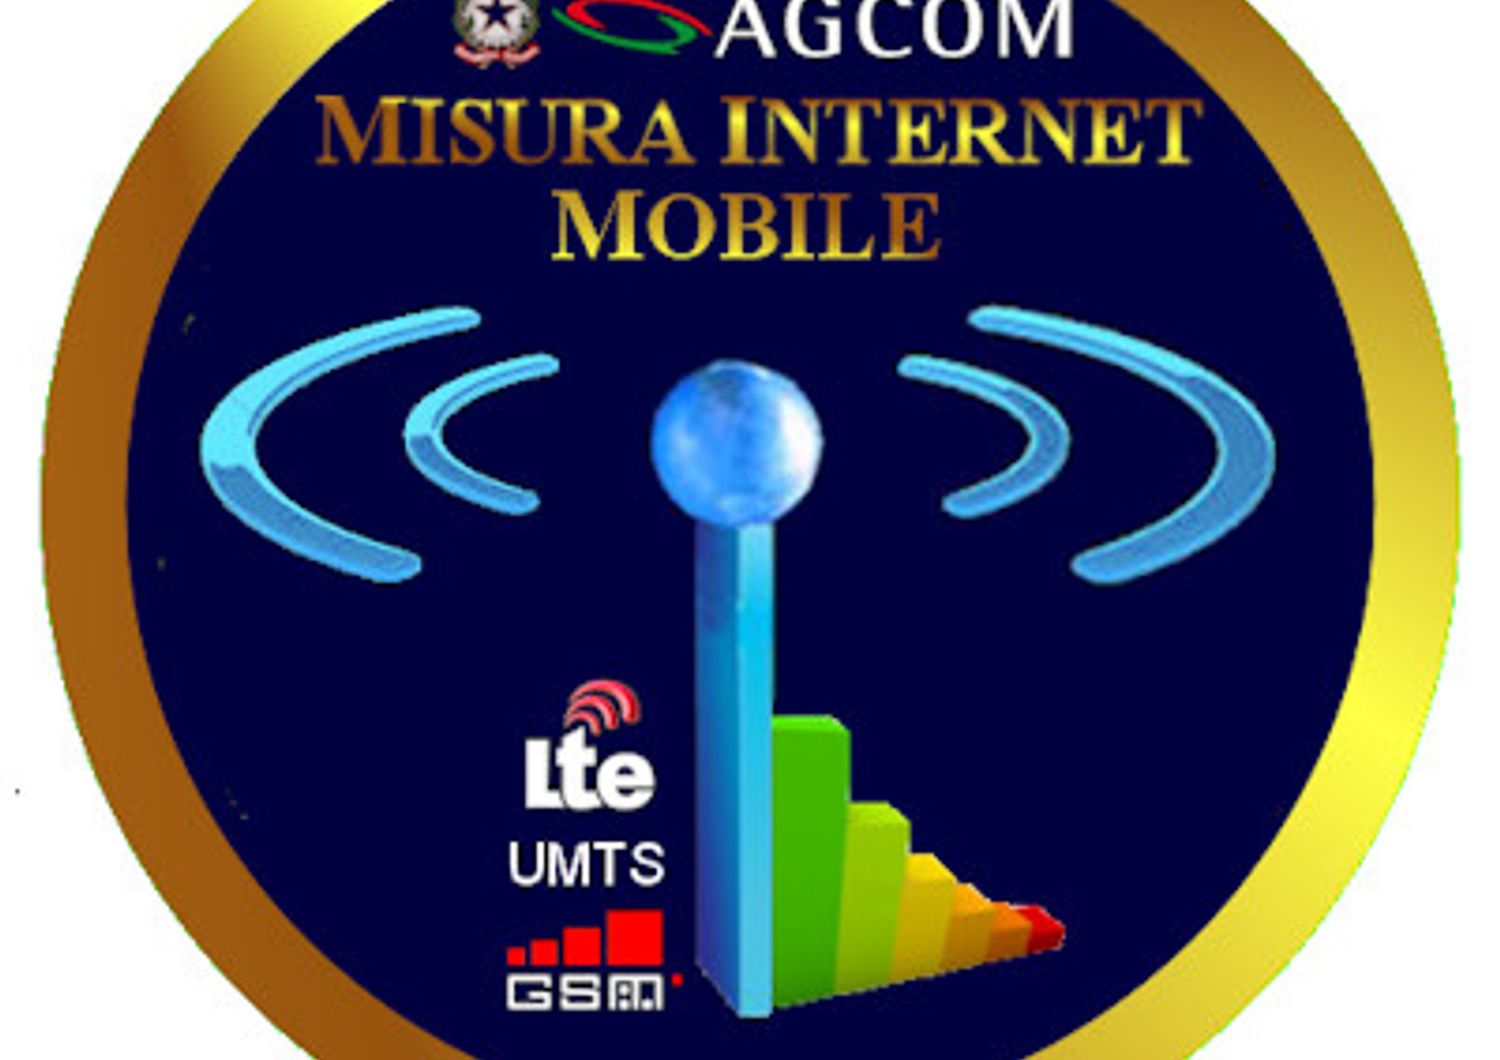 &nbsp;Misura Internet Mobile (AgCom)